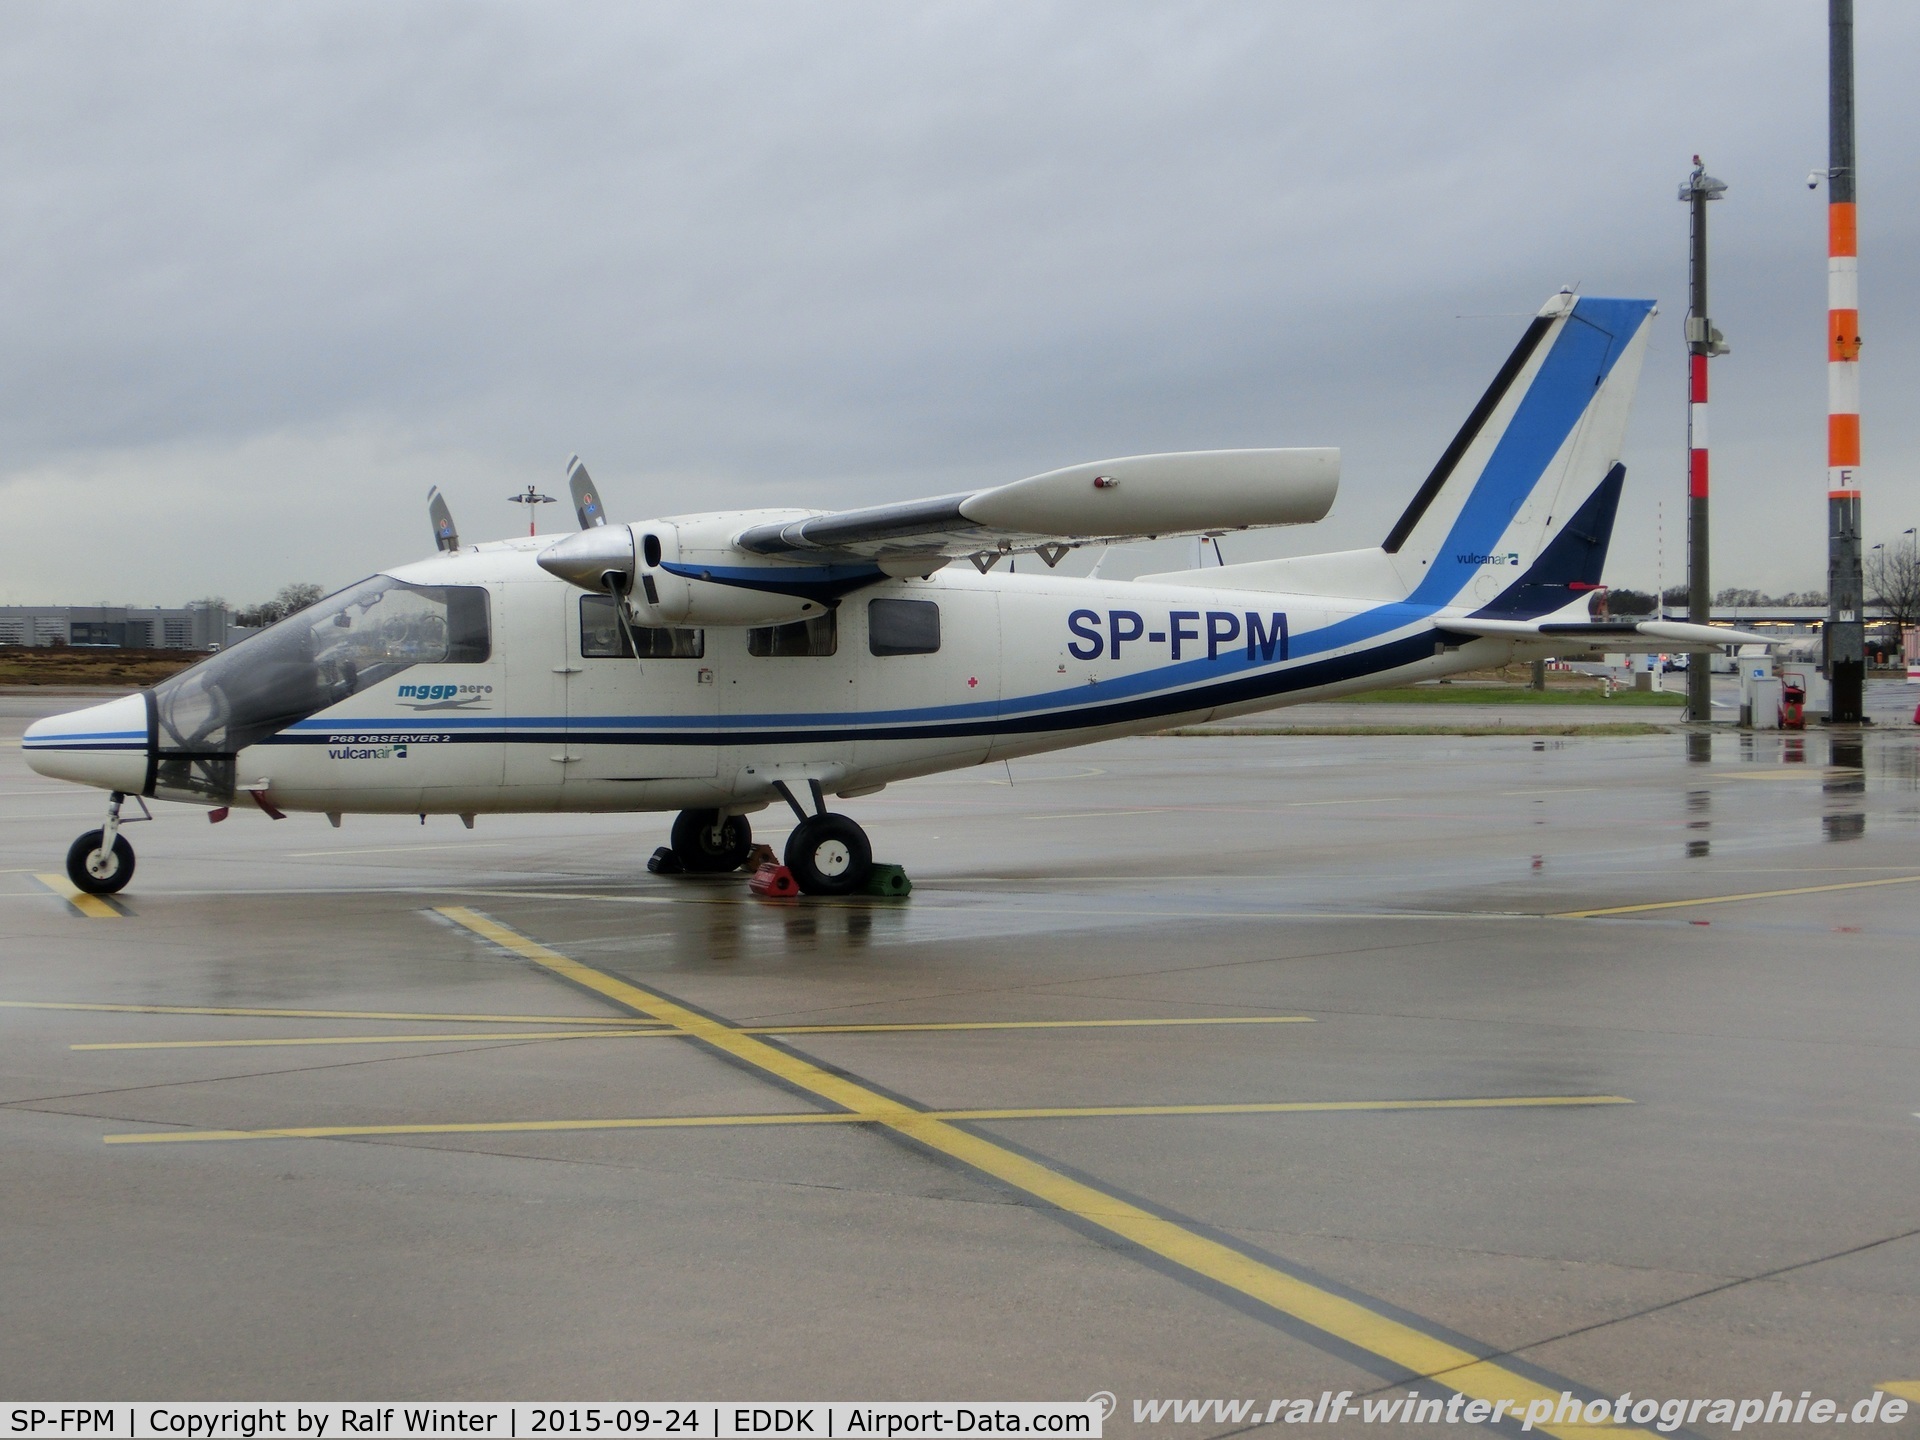 SP-FPM, 2002 Vulcanair P-68 Observer 2 C/N 420-20/OB2, Vulcanair P-68 Observer 2 - MGGP Aero - SP-FPM - 24.09.2015 - CGN